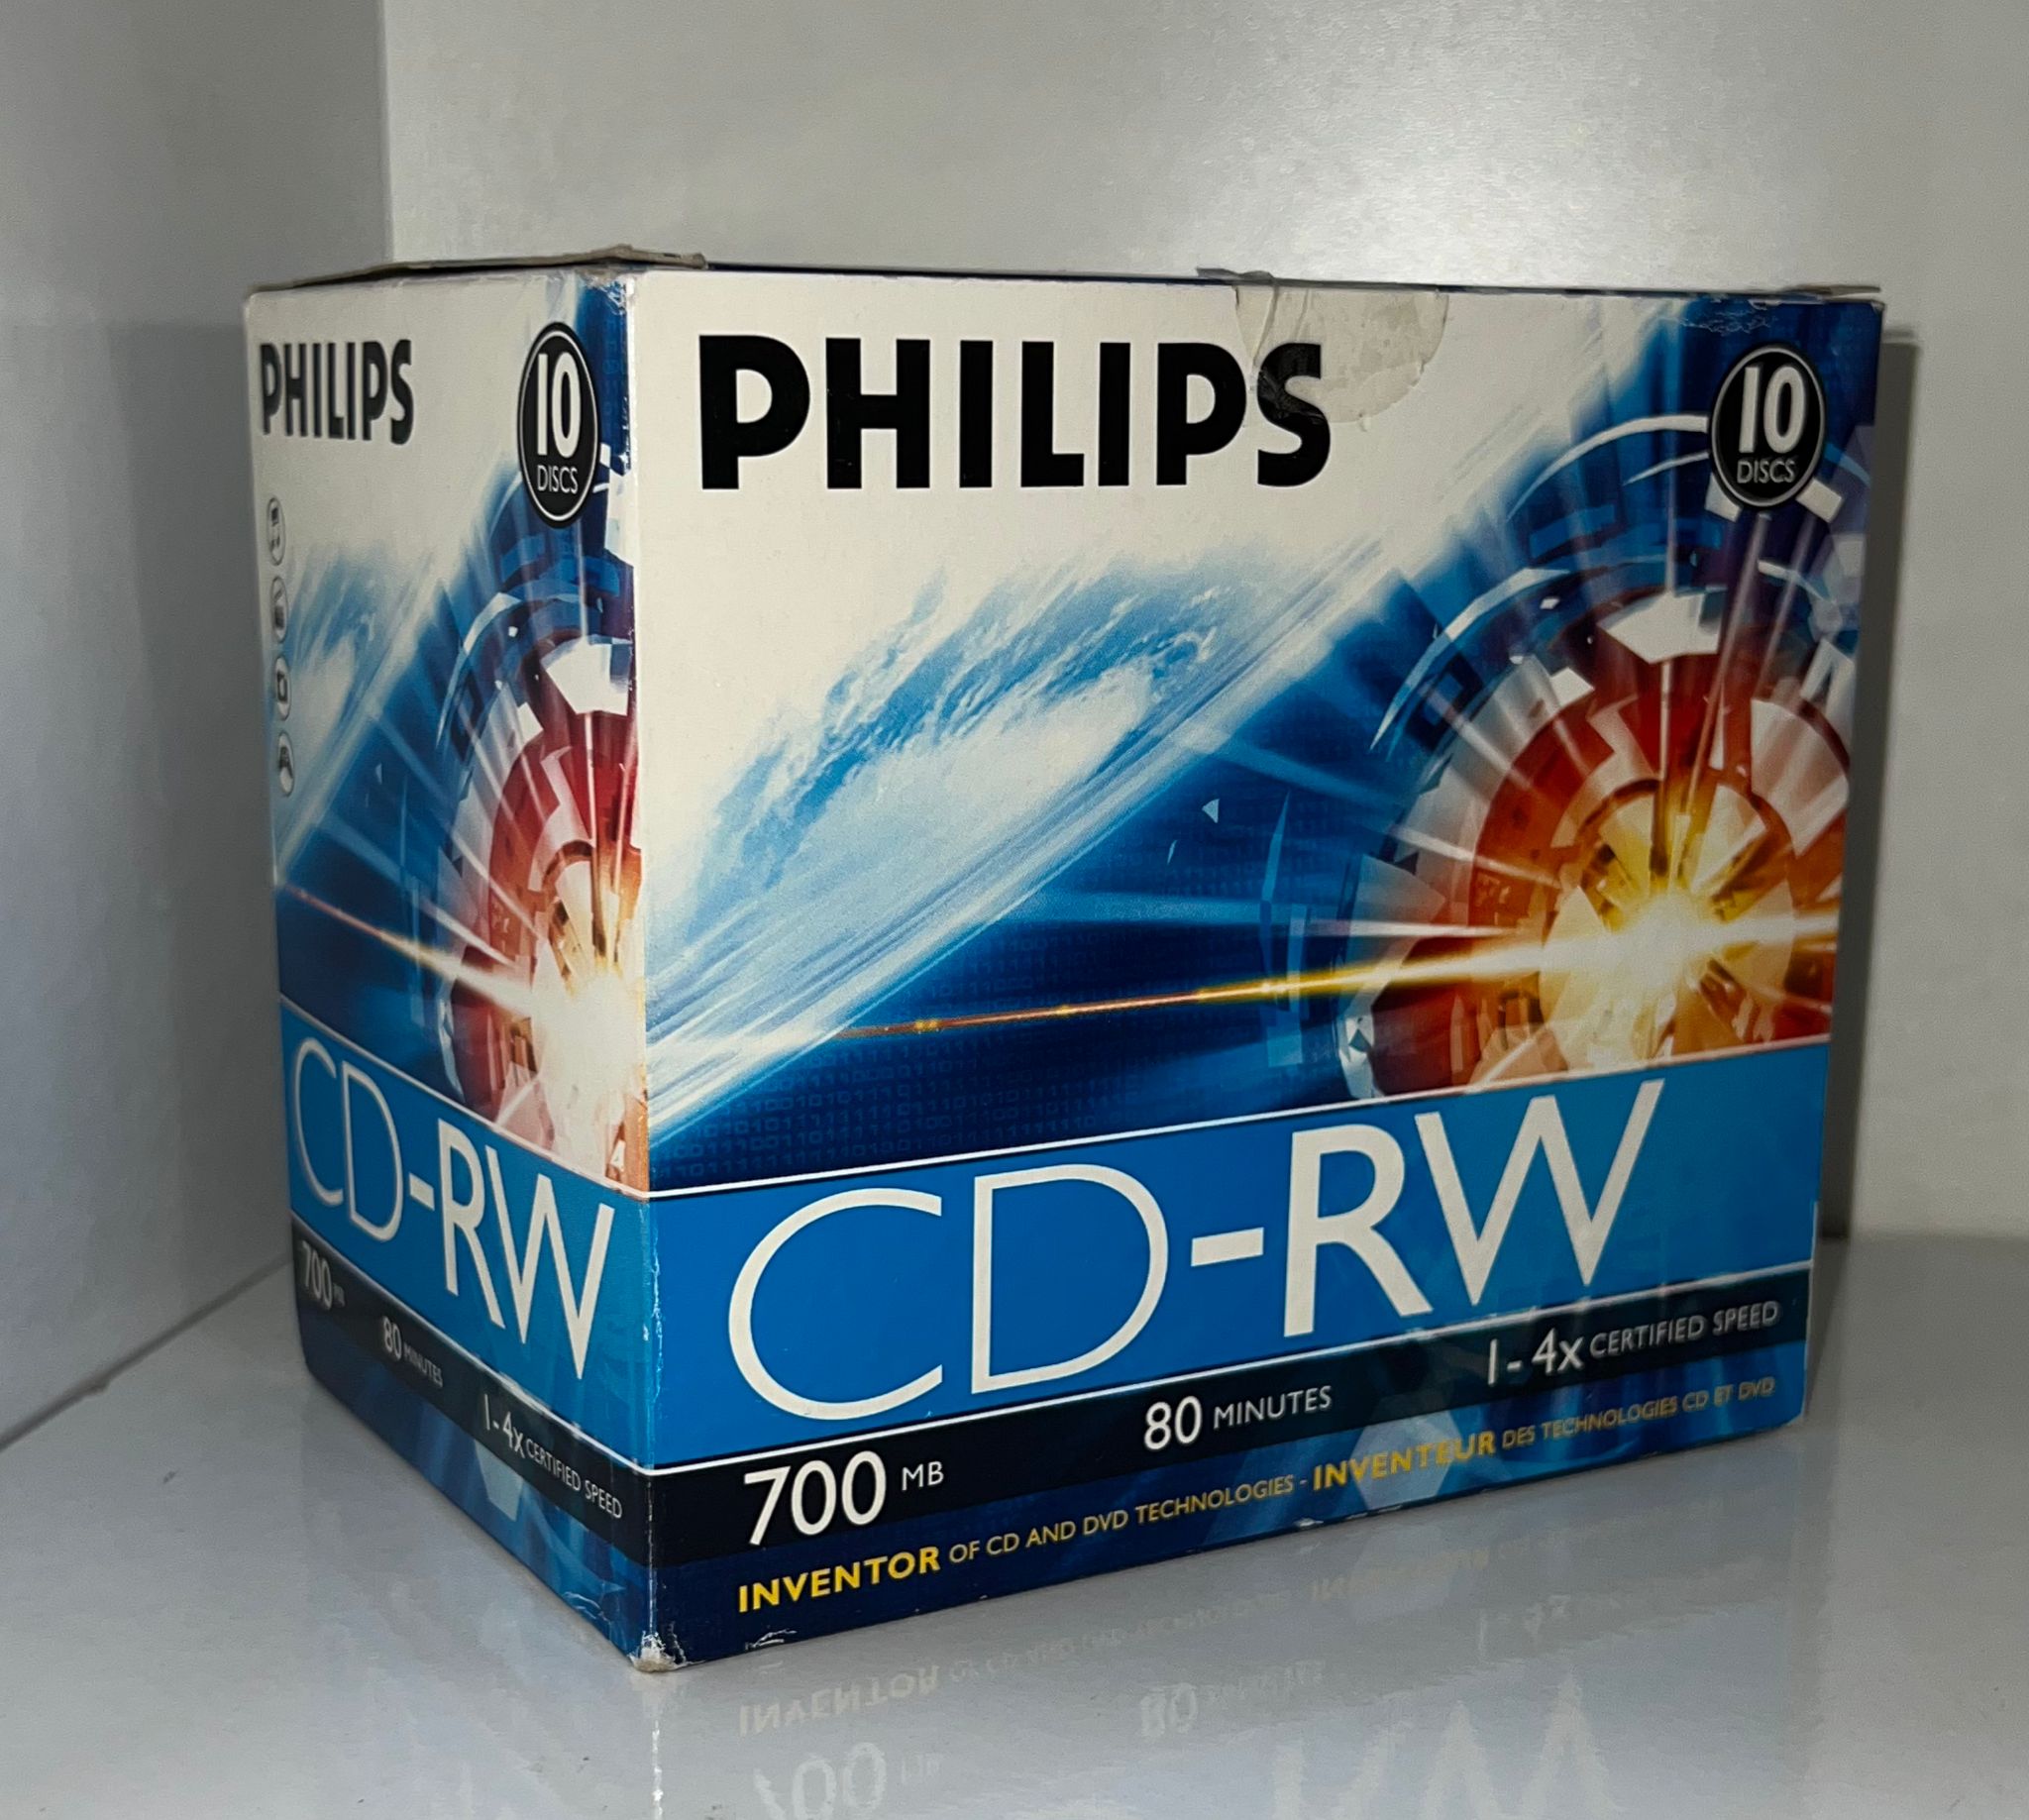 PHILIPS CD-RW 700MB 80MIN 1.4X CS 10 DISCS